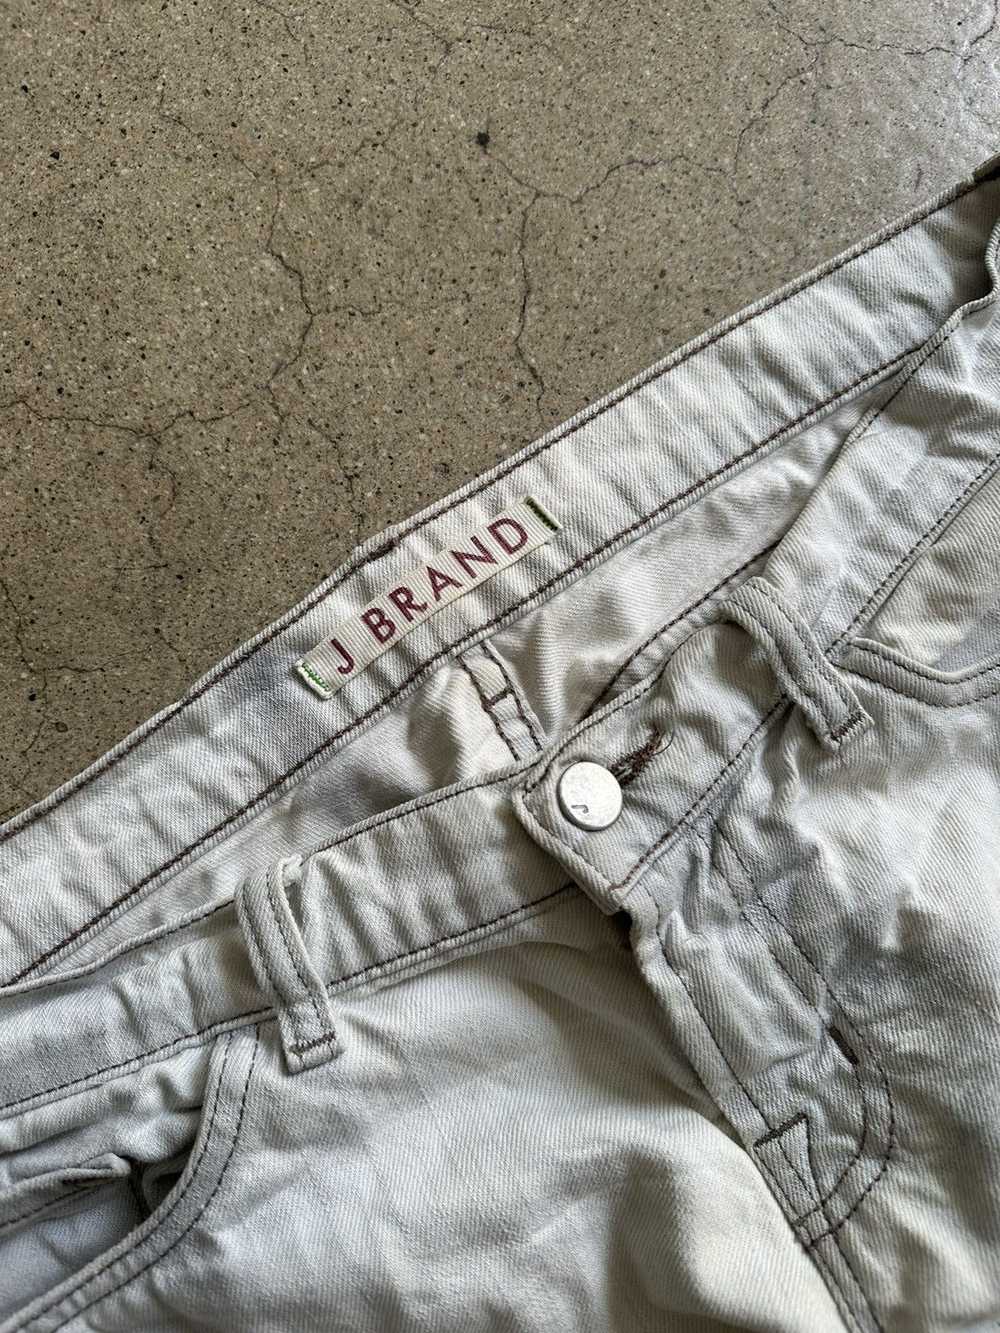 J Brand Thrashed White / Grey Denim J Brand Jeans - image 3